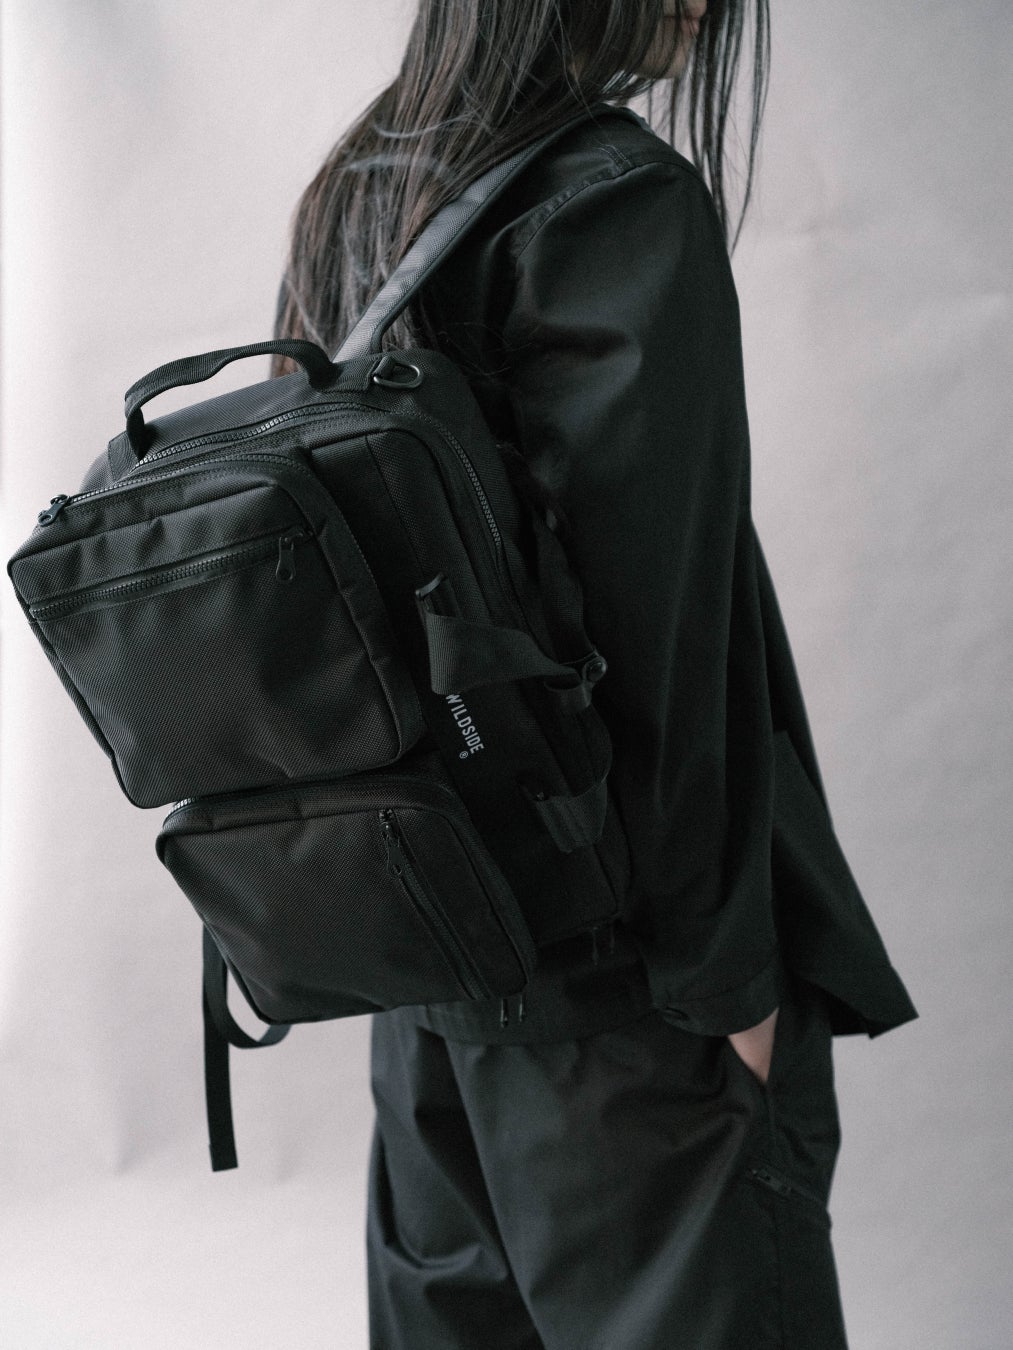 WILDSIDE YOHJI YAMAMOTOオリジナルラインより新作バッグ2型を3月27日(水)に発売